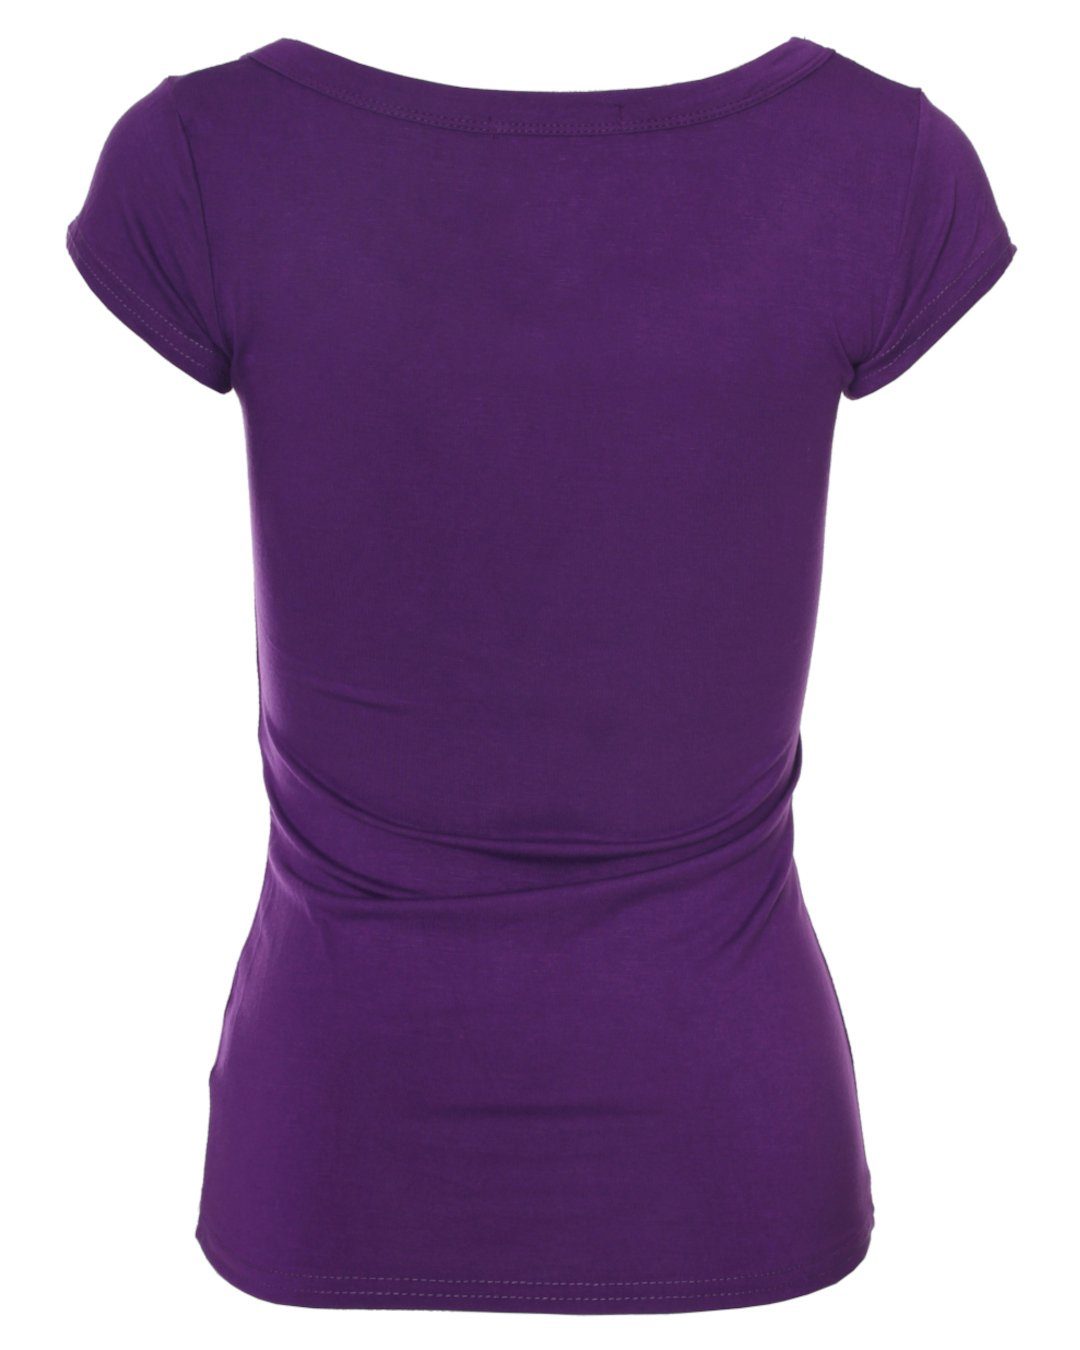 Skinny 1001 Muse violett Basic T-Shirt T-Shirt Fit Kurzarm